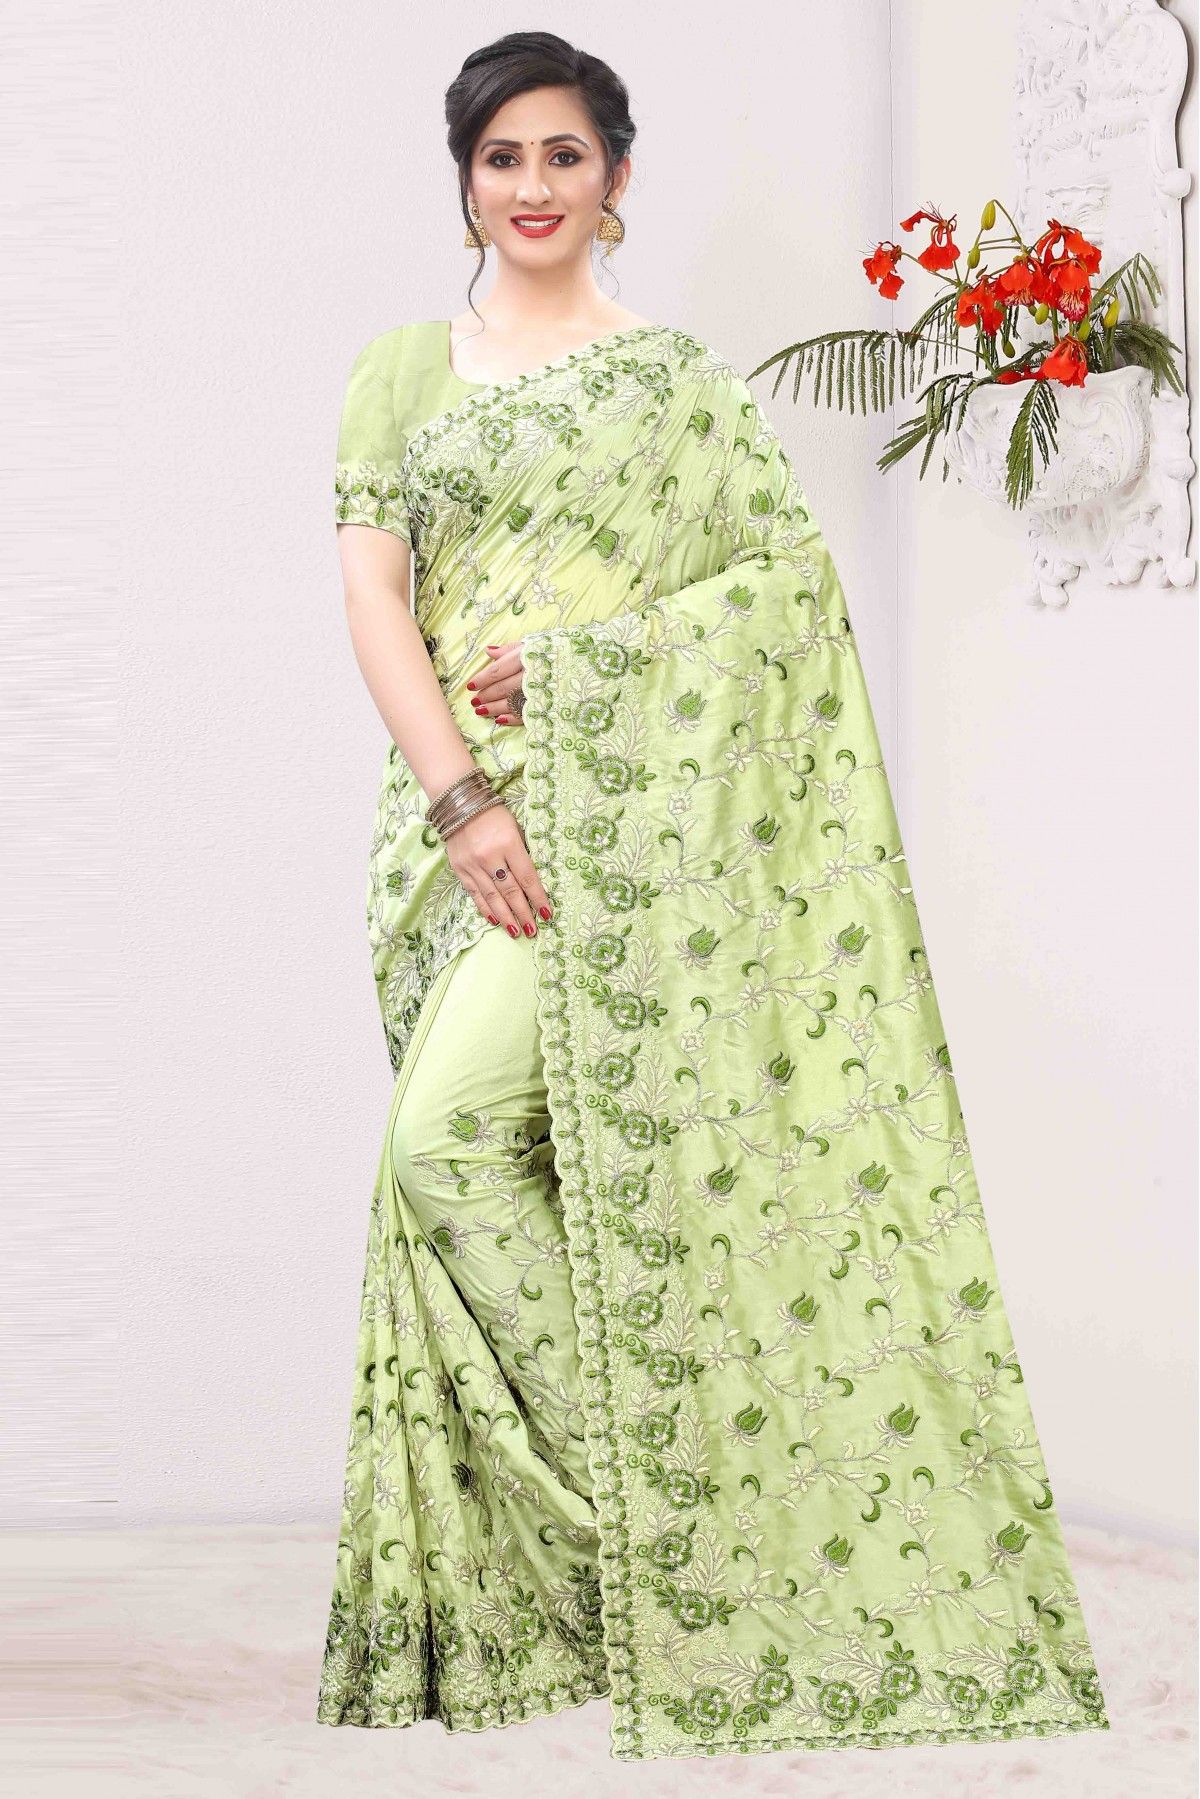 0 Likes, 0 Comments - fashion trendzz (@fashion.trendzz1) on Instagram:  “Wish to buy… | Stylish sarees, Designer saree blouse patterns, Indian saree  blouses designs